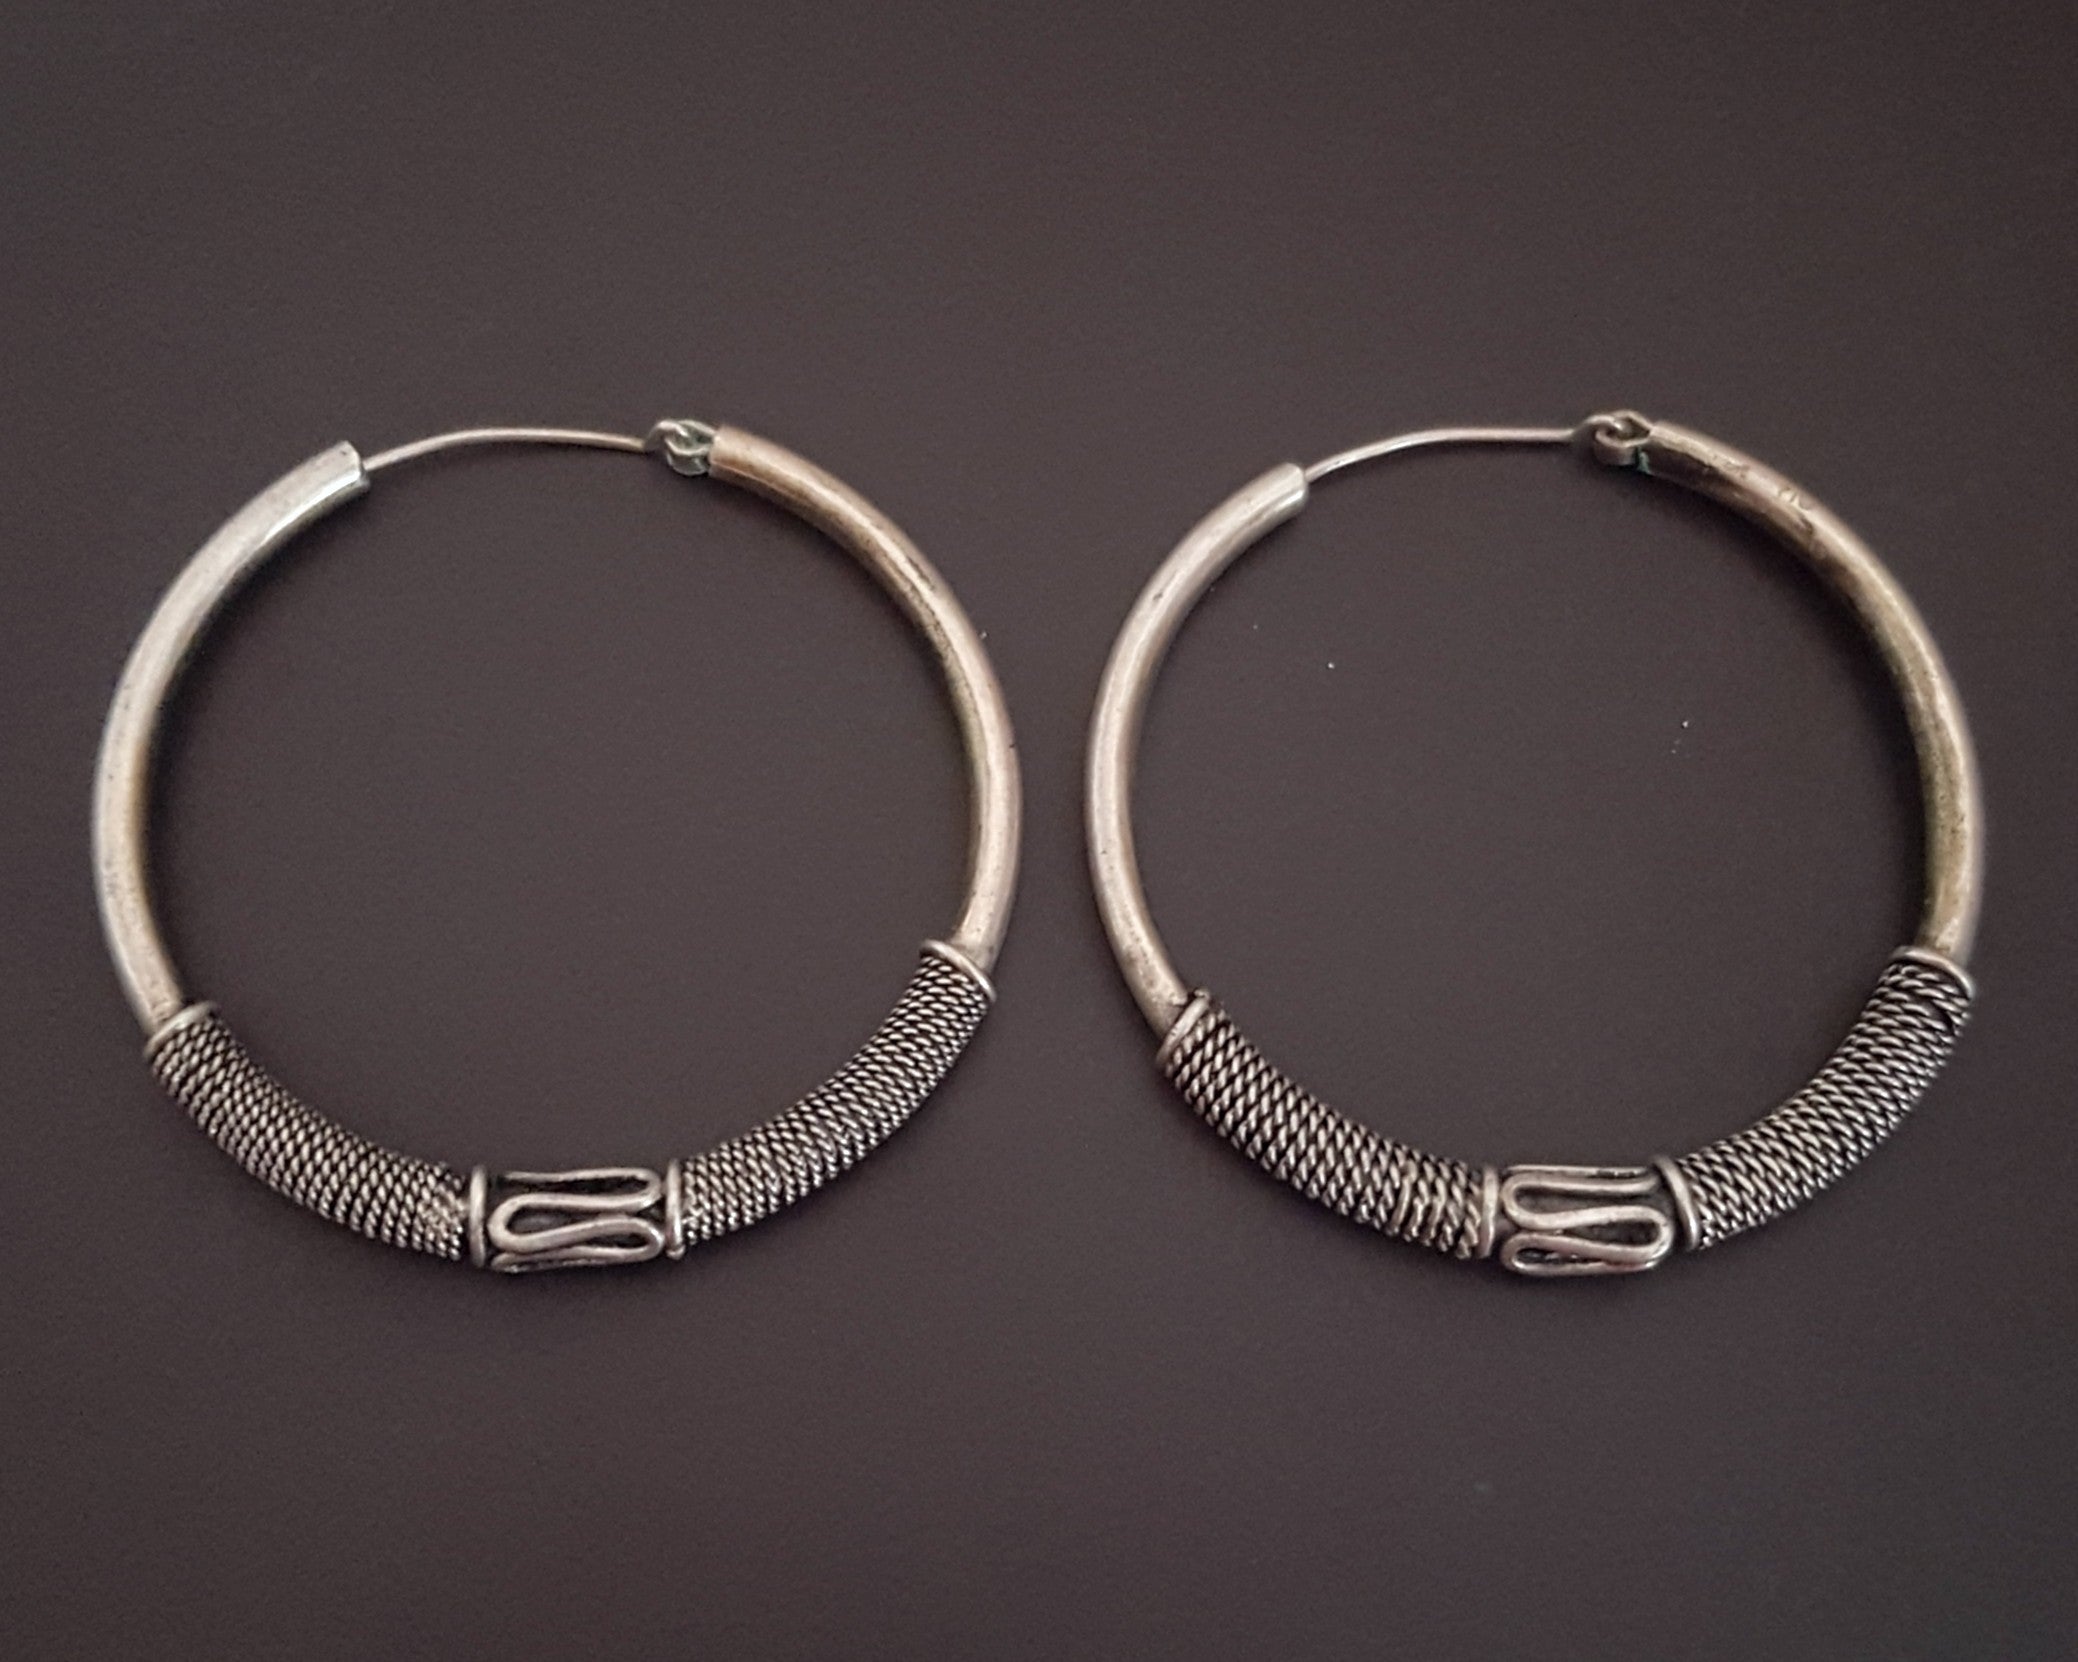 Large Ethnic Bali Hoop Earrings with Wire Work